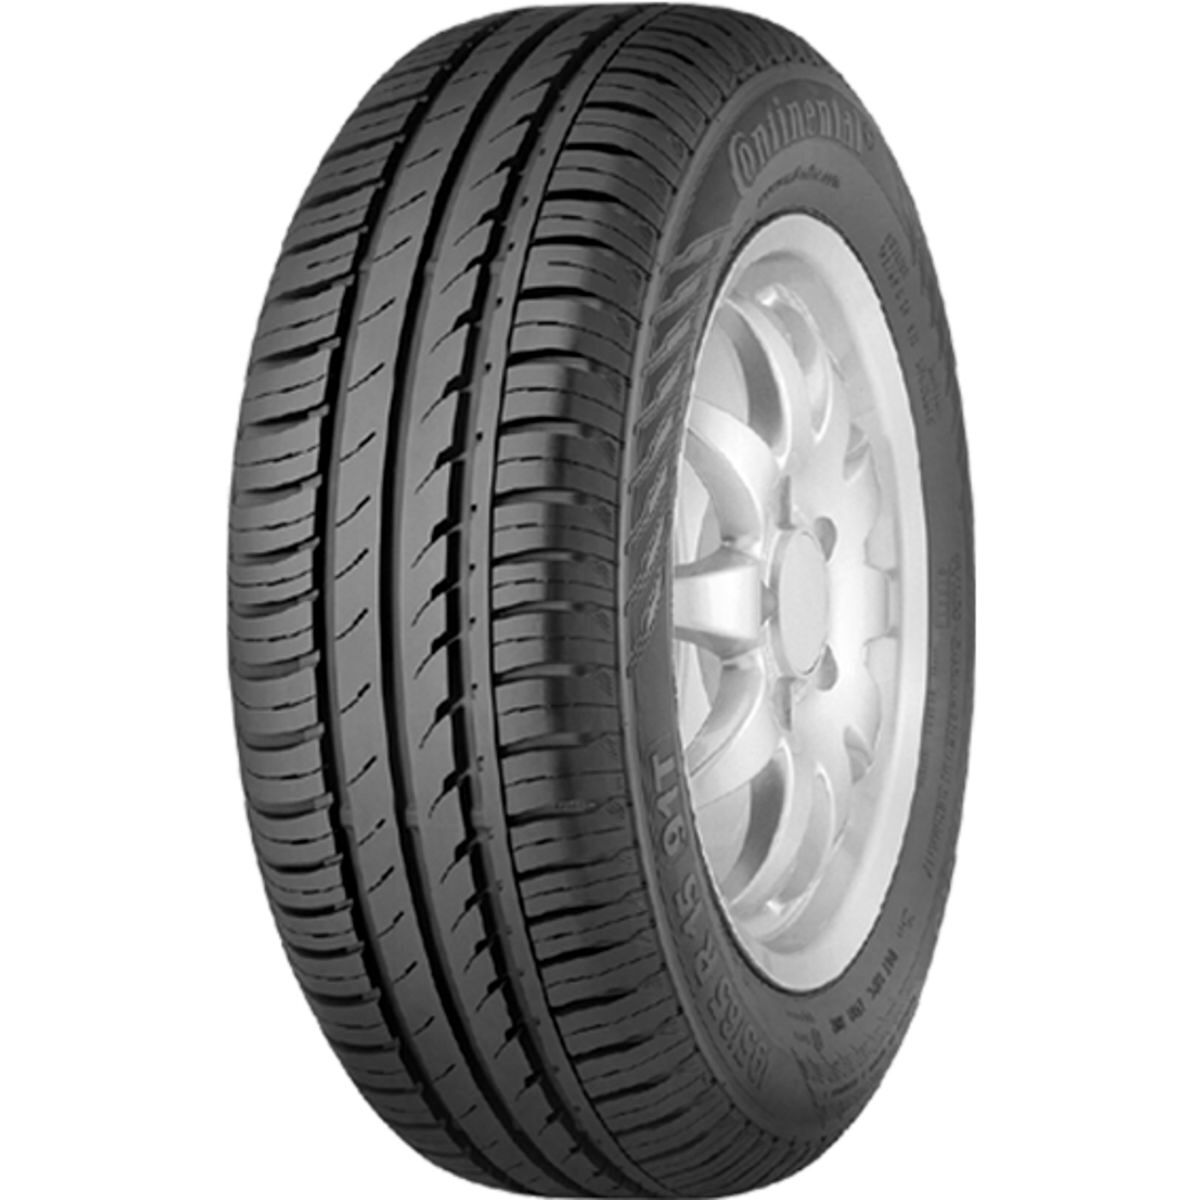 Neumáticos de verano CONTINENTAL ContiEcoContact 3 145/70R13 71T